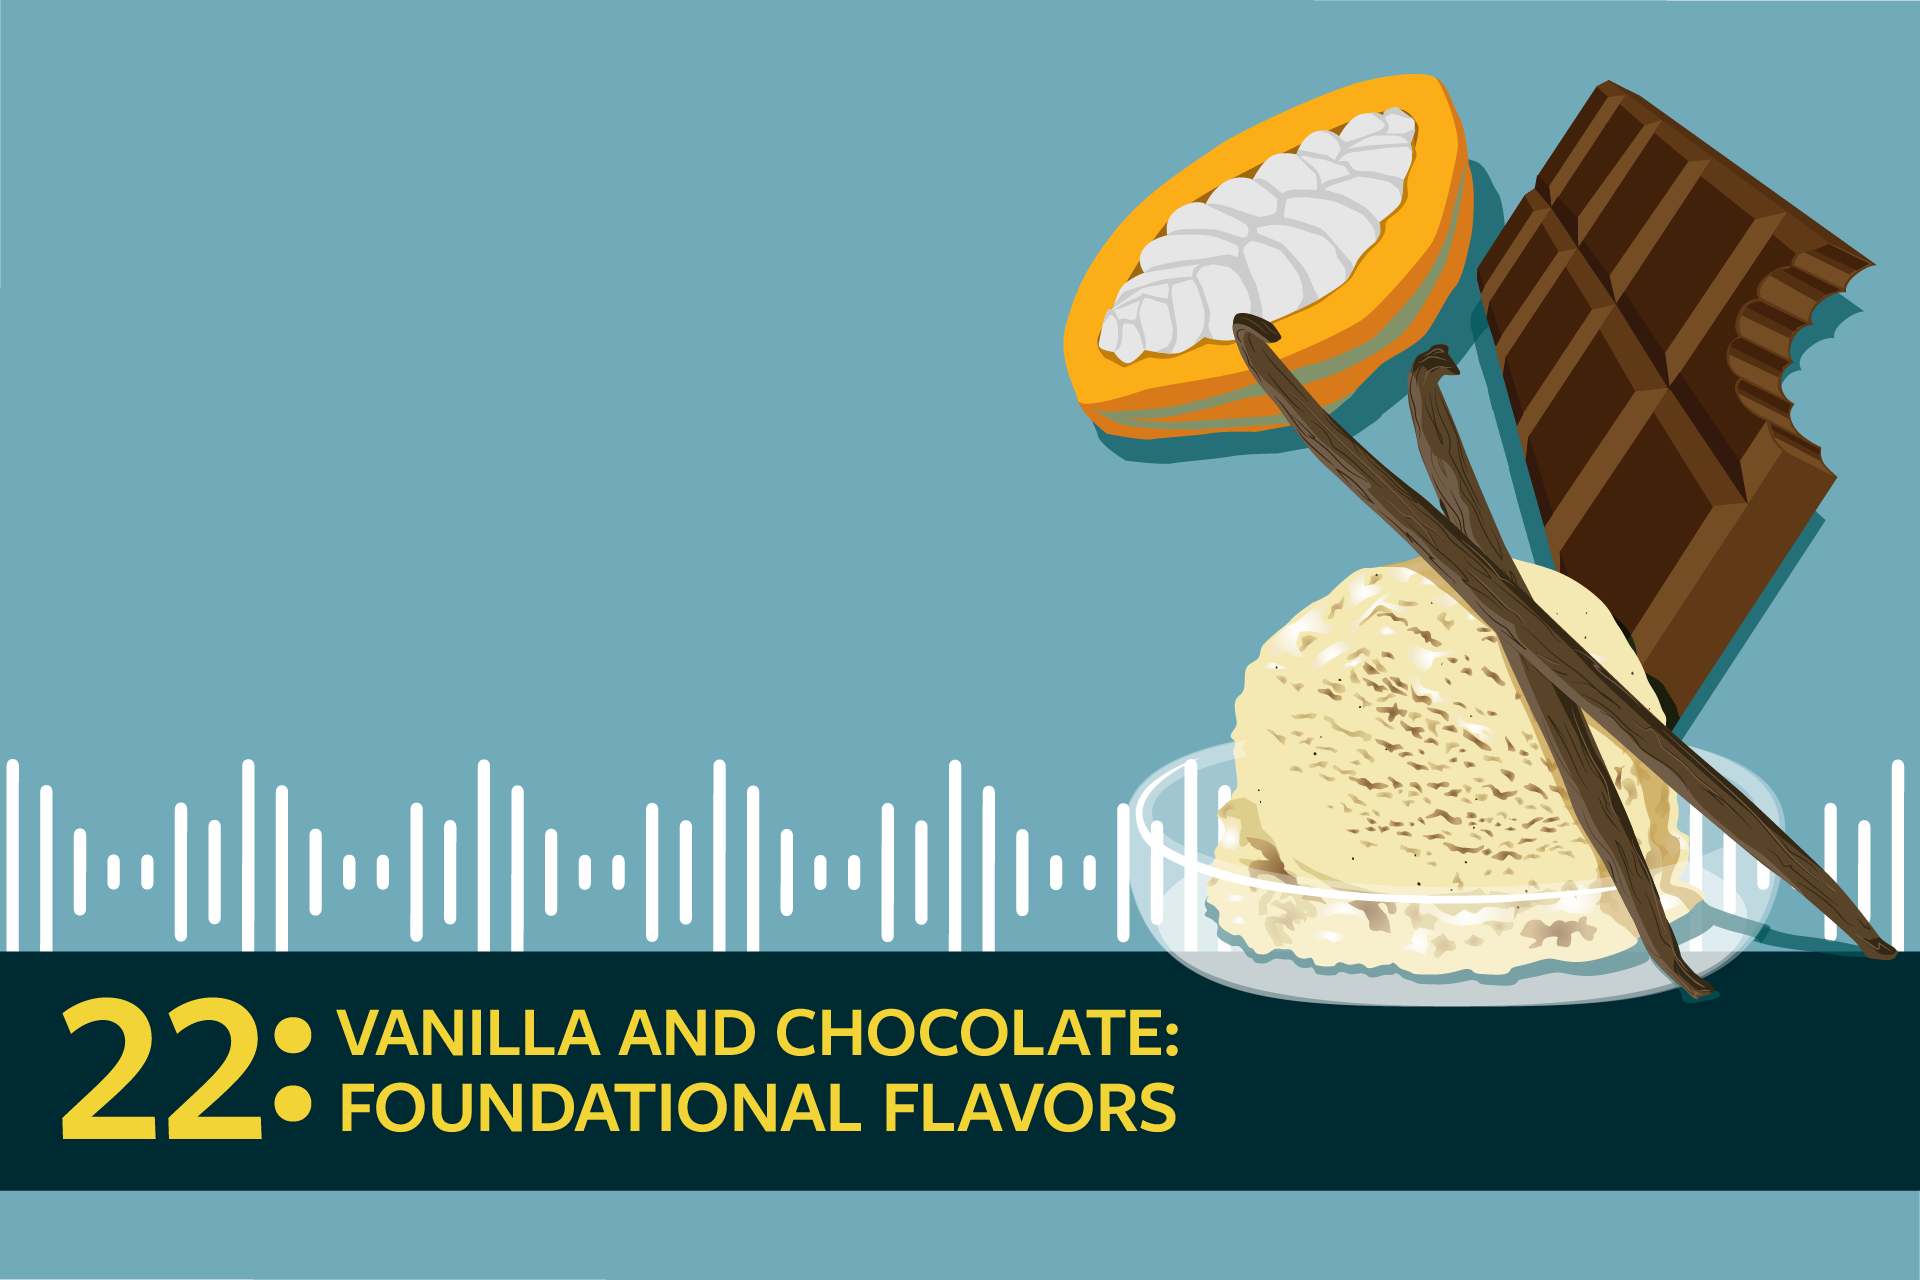 chocolate and vanilla illustrated graphic